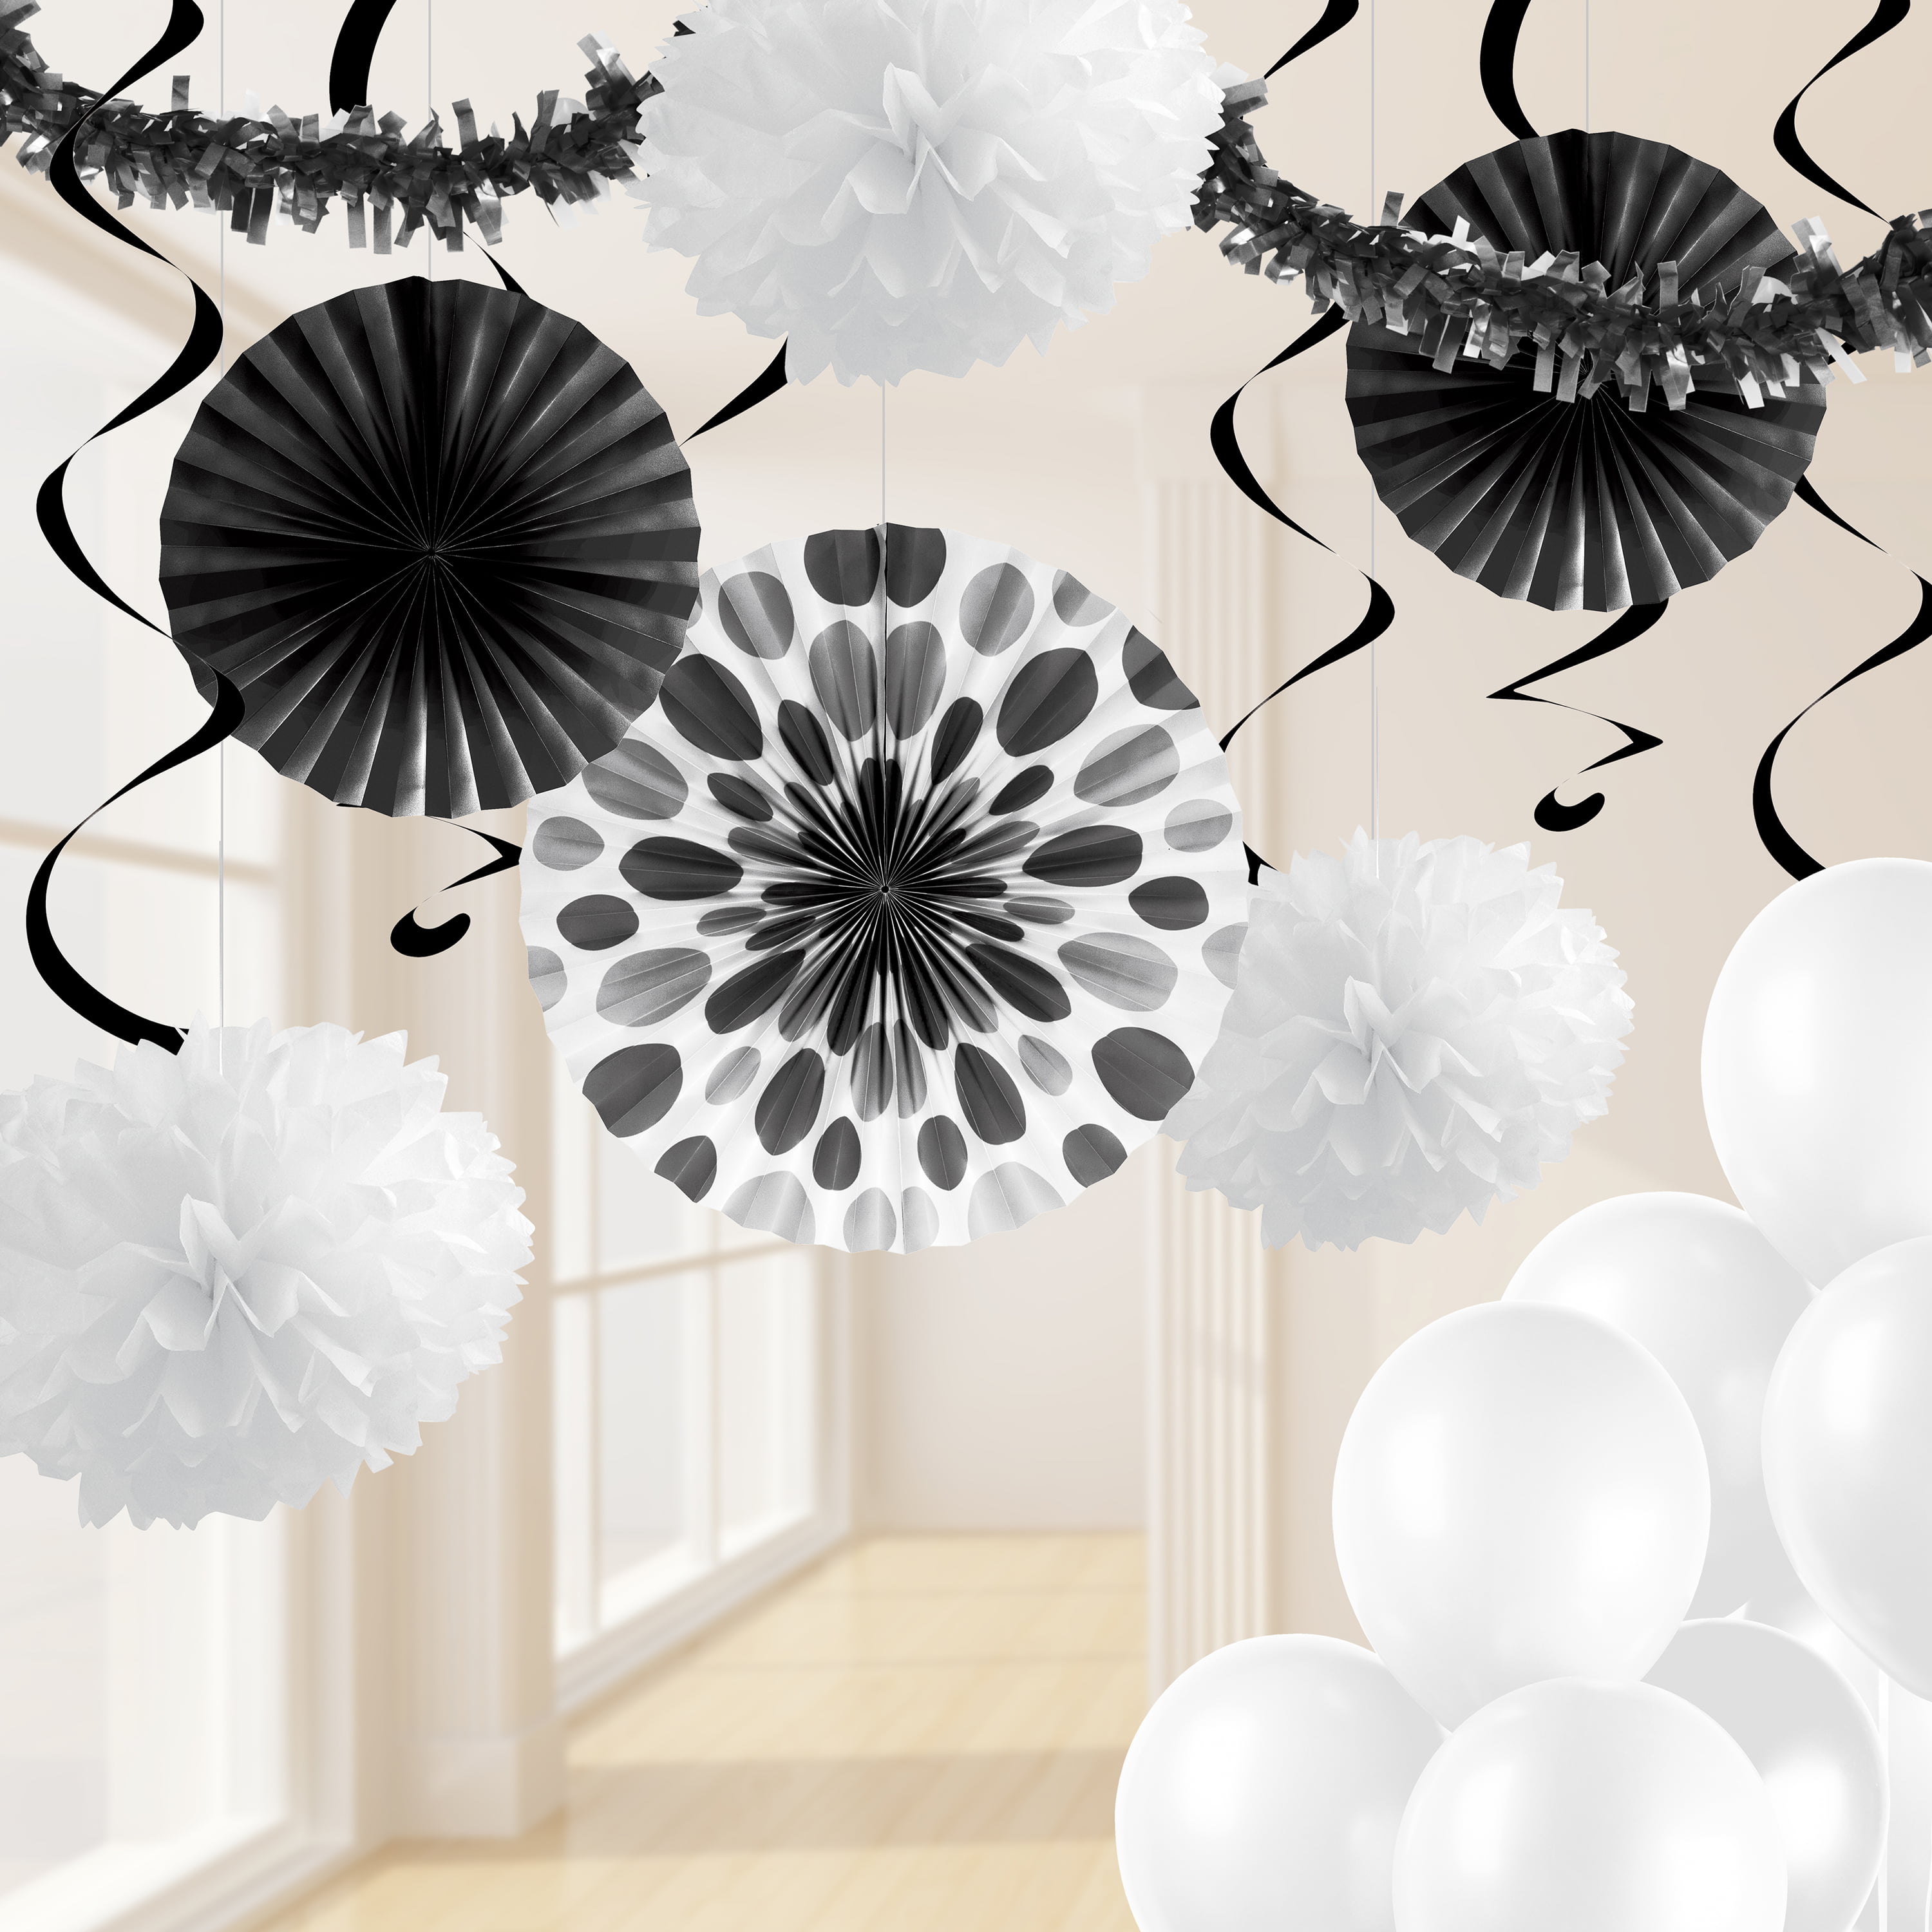 Black and White Party Decorations Kit, 32 pcs